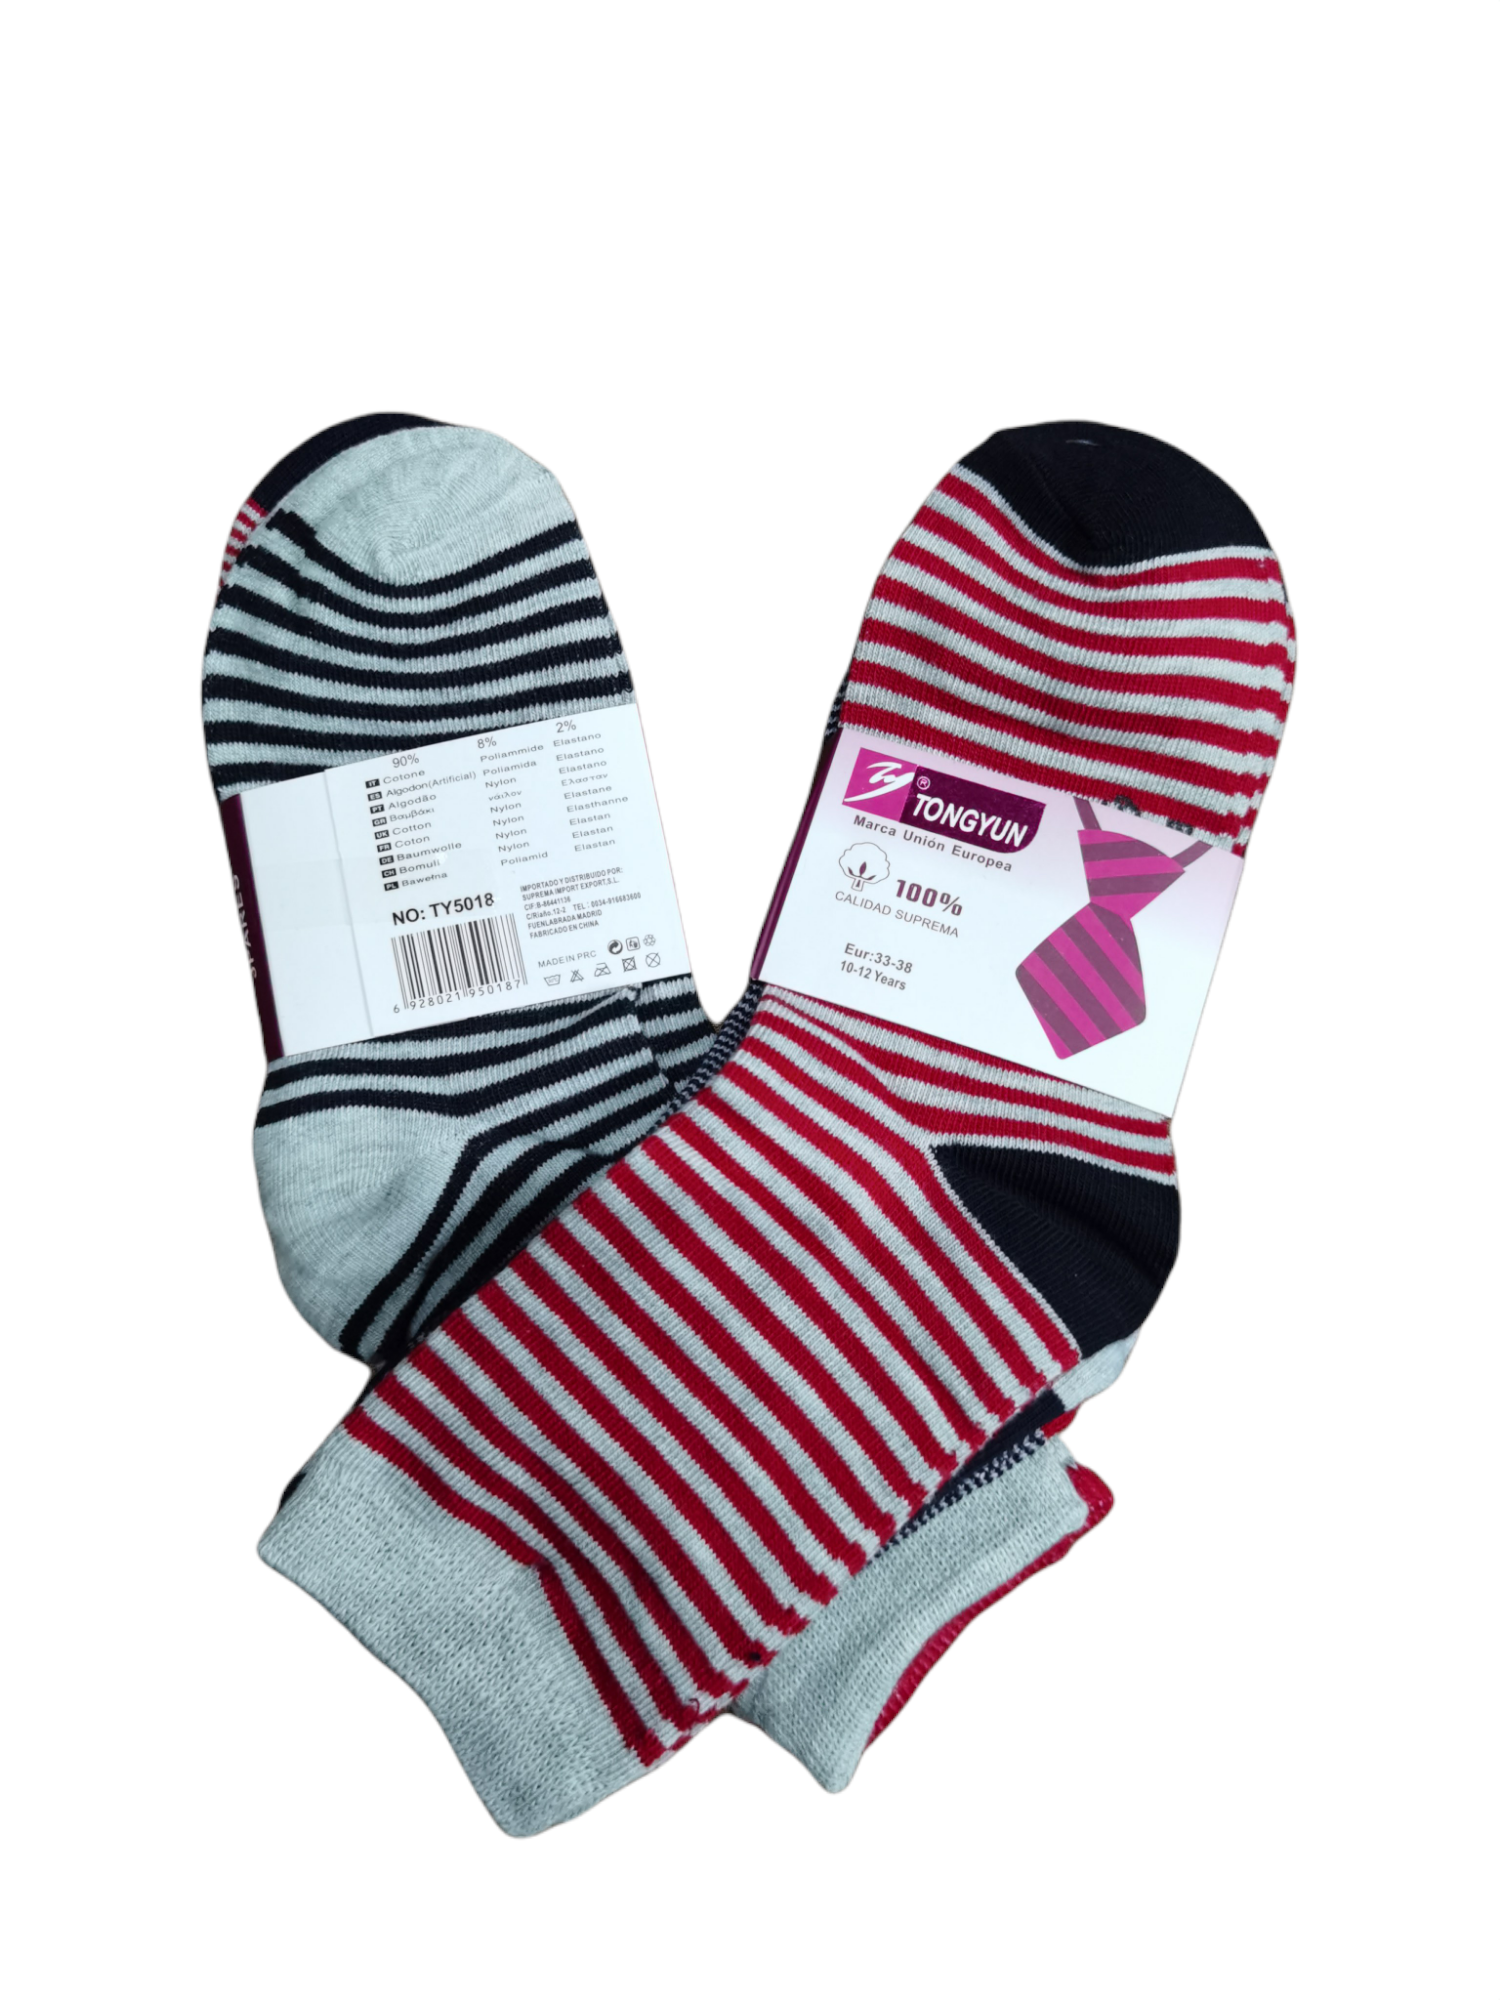 GIRL - Cotton socks 3 mixed sizes T21-26/27-32/33-38 (x36)